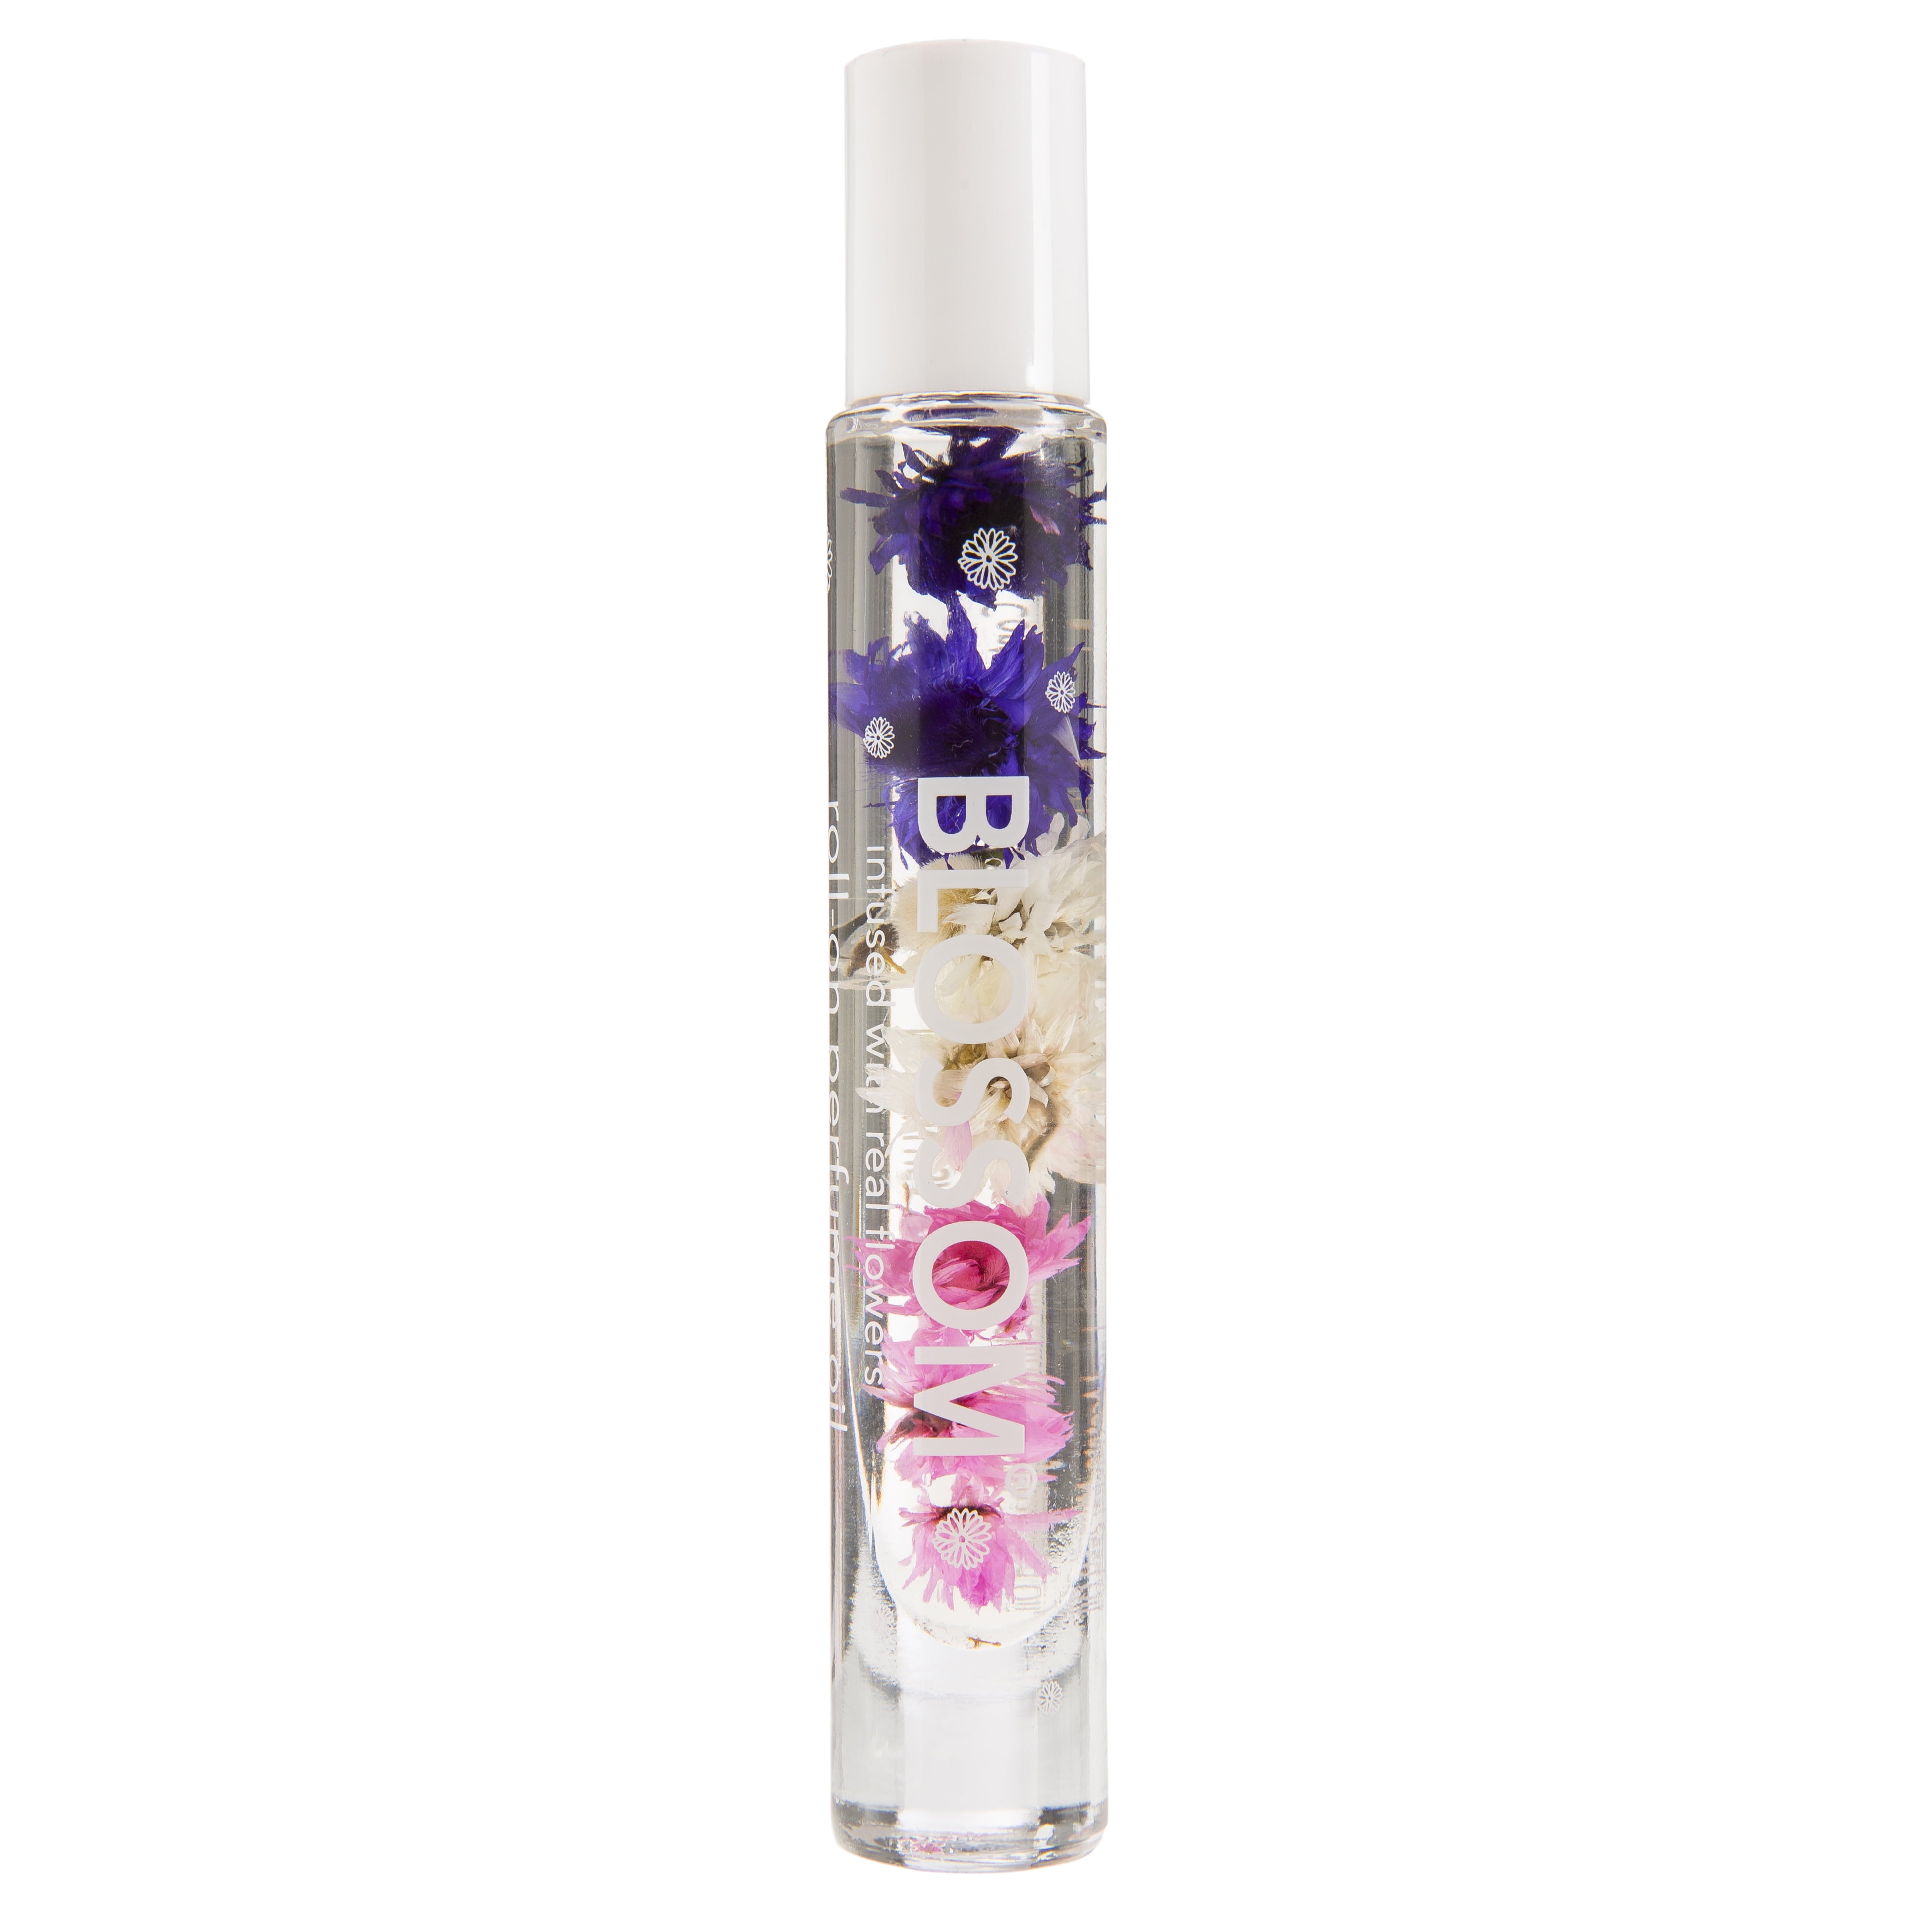 Pīkake Lei Jasmine Body Oil / Perfume Roller 15ml – Hawaiiverse